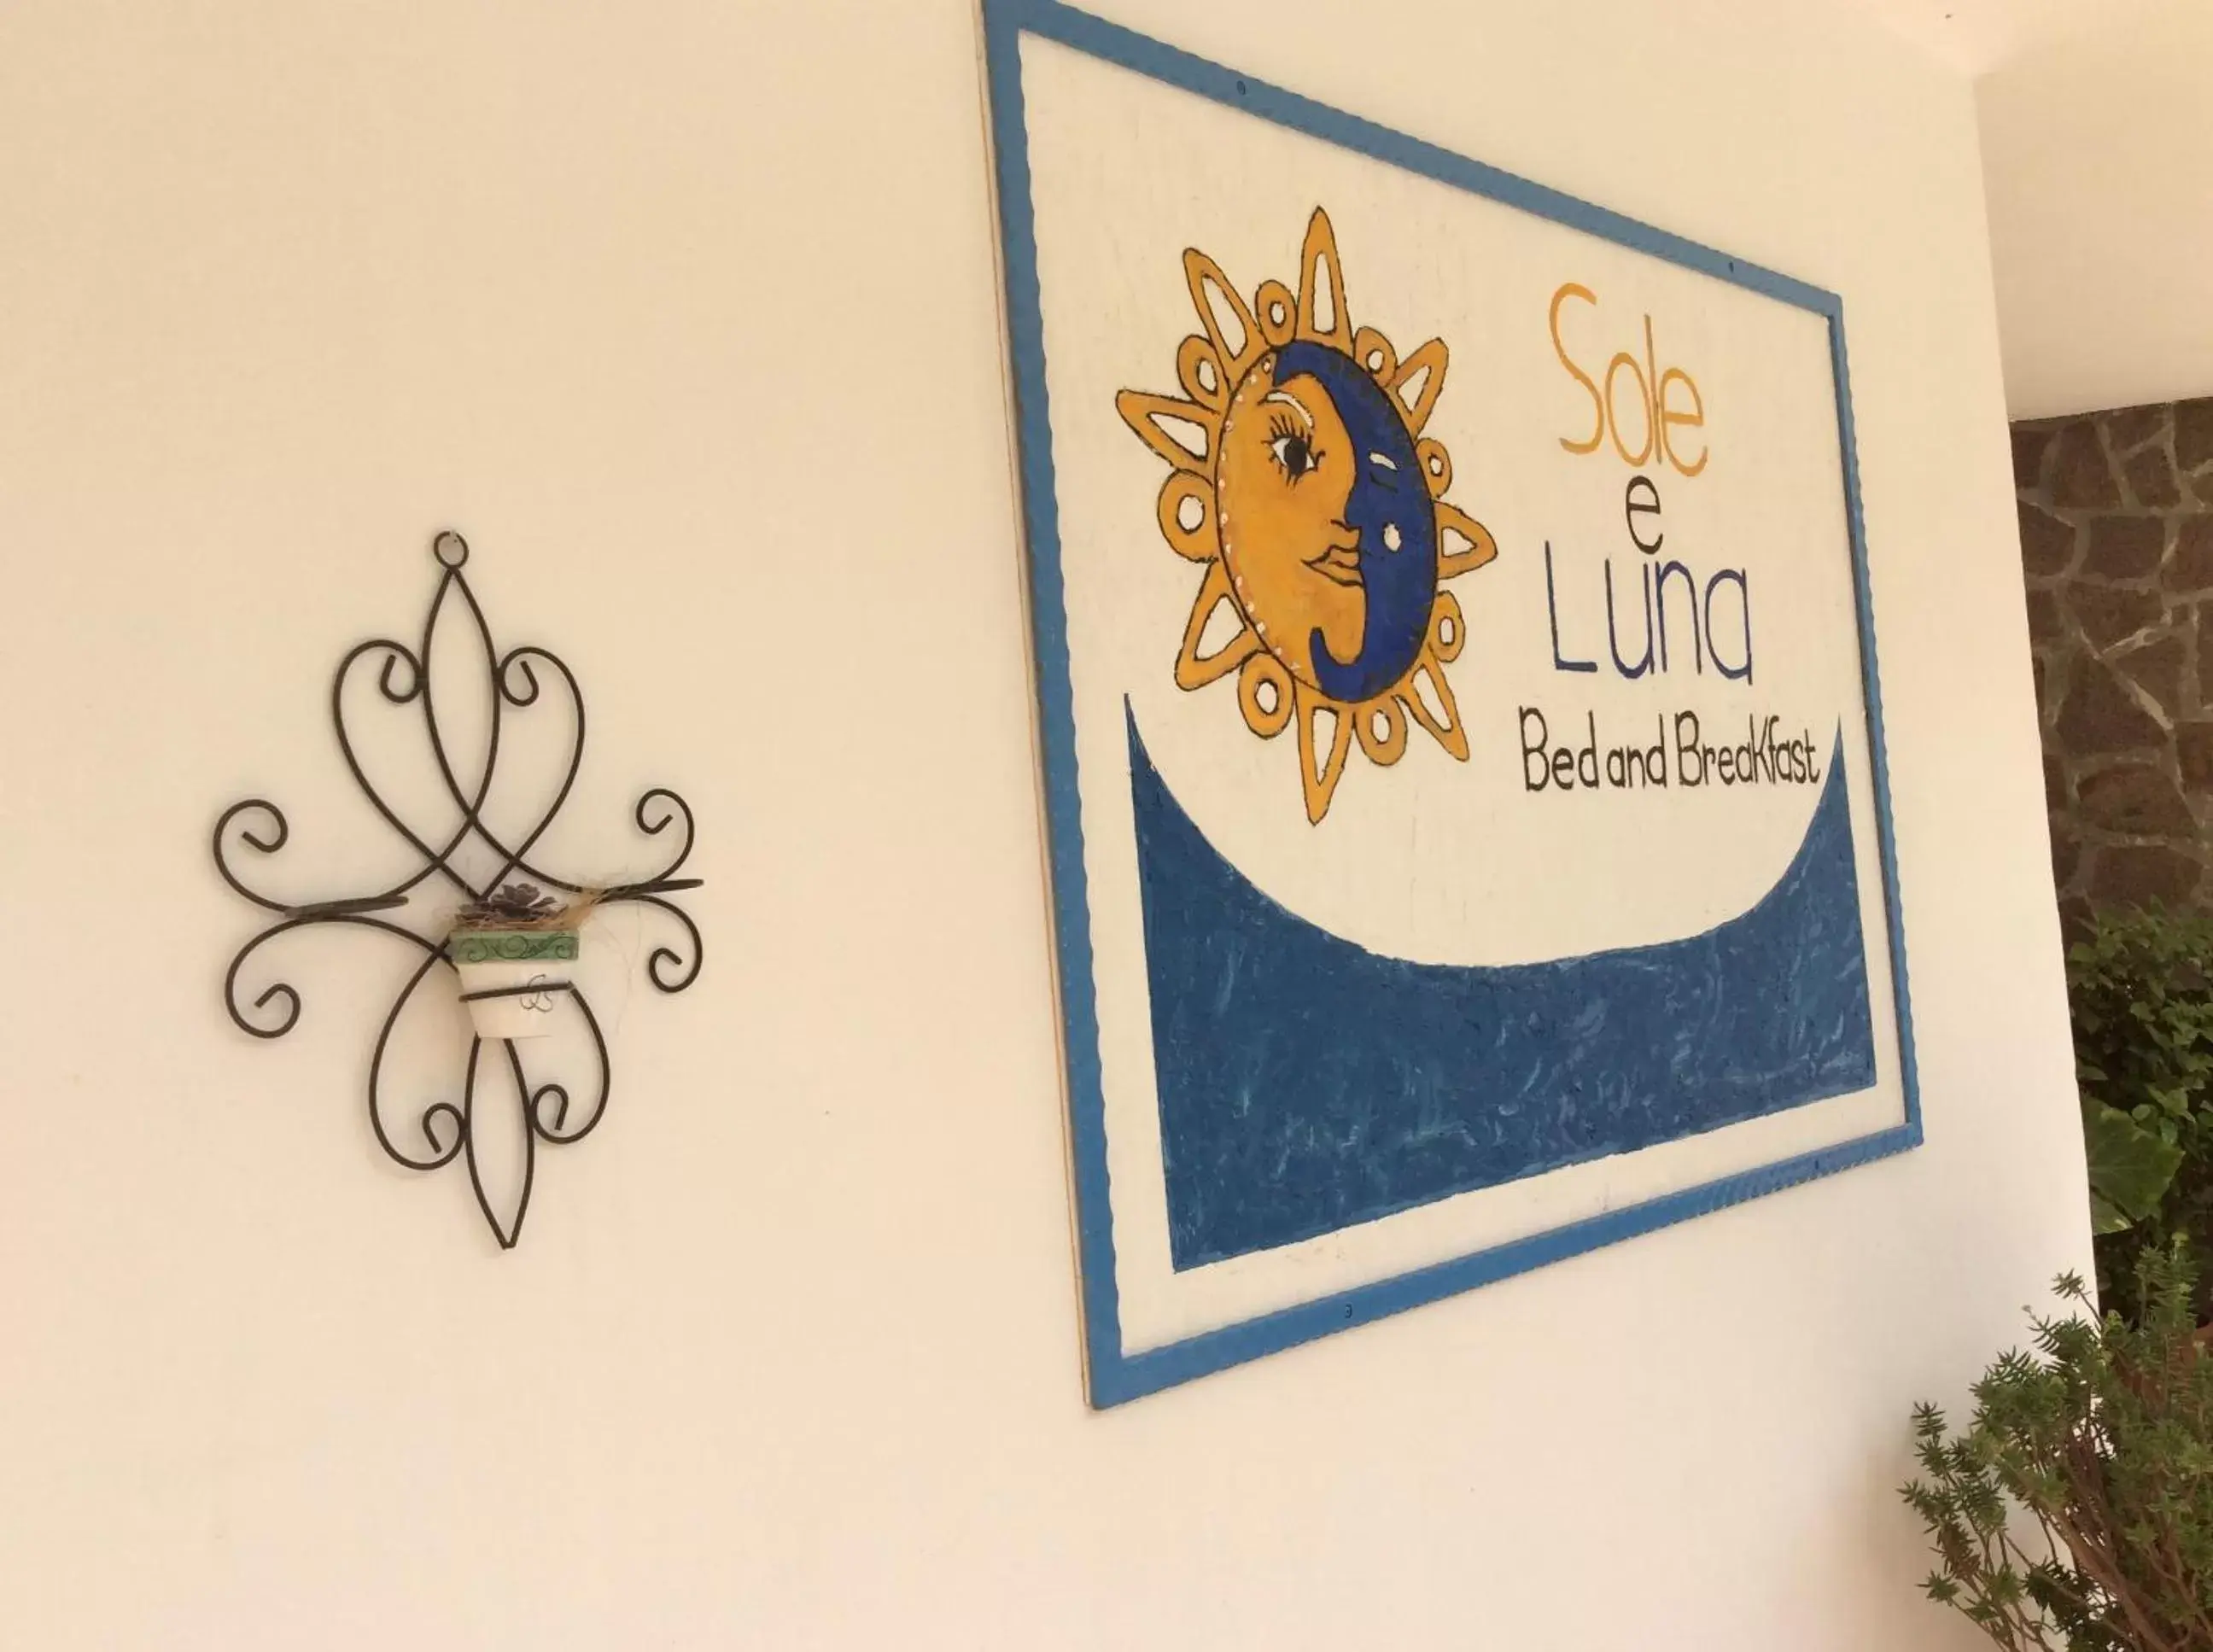 Property logo or sign in Sole e Luna